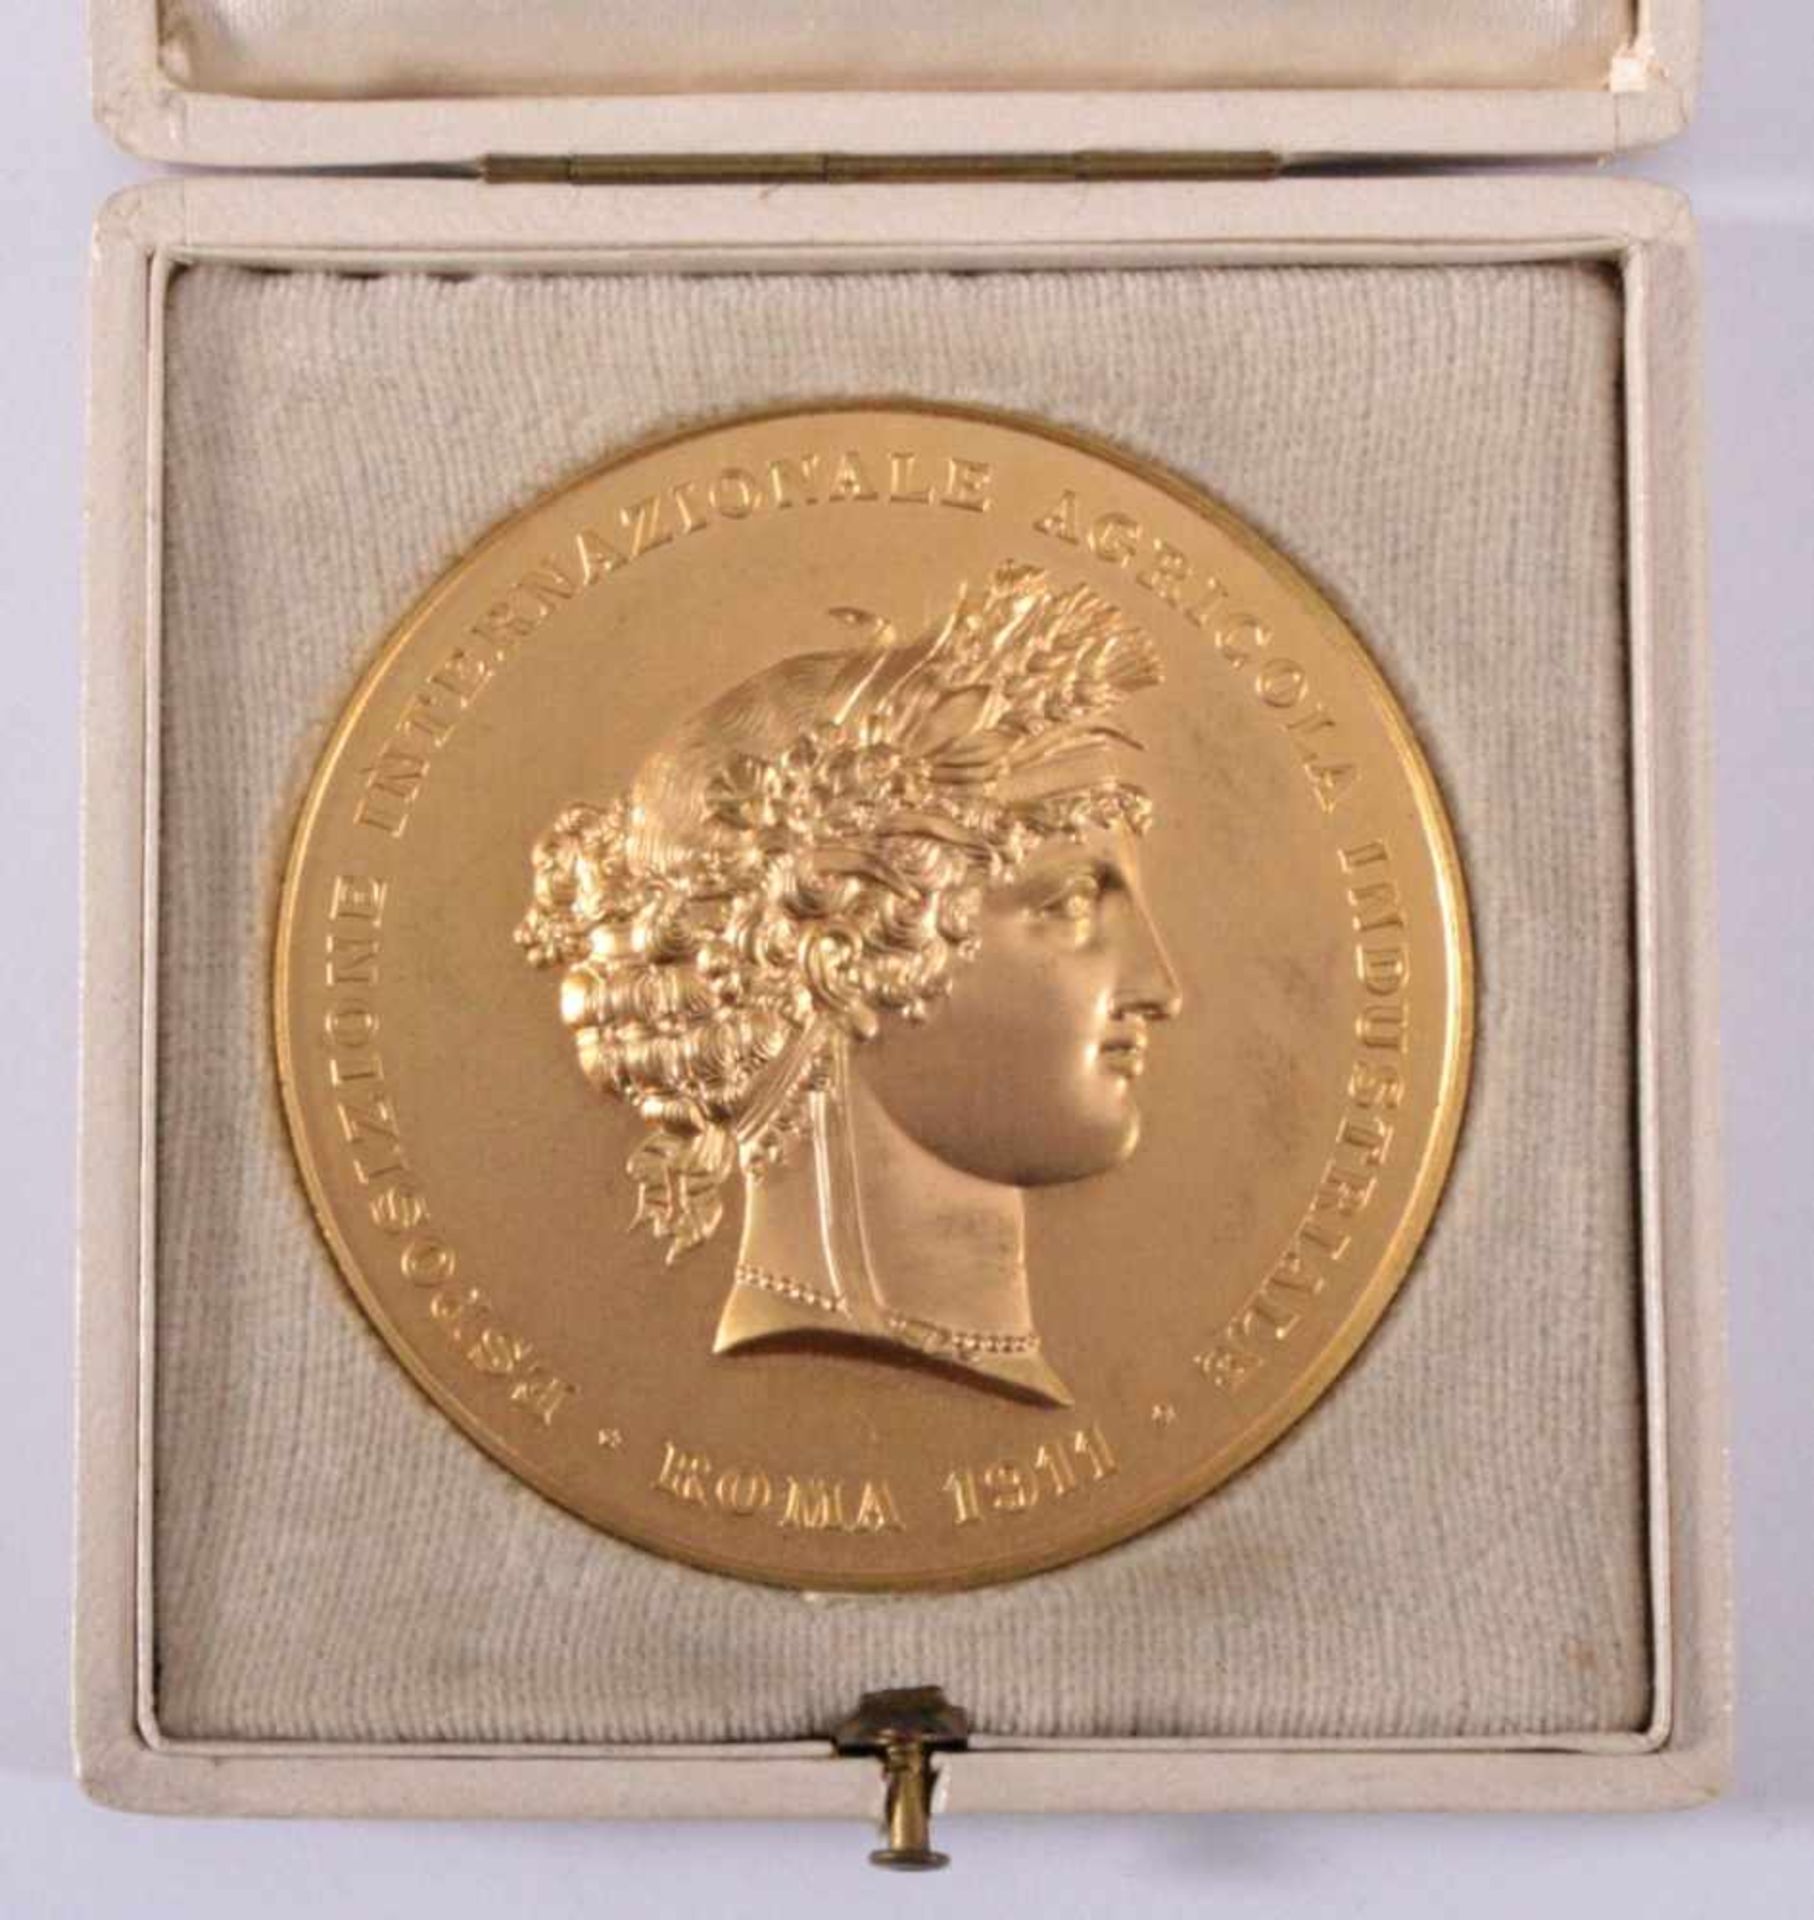 Bronze-Medaille, vergoldet, Esposizione Internazionale 1911Roma 1911, ca. D- 6 cm, 90,4 g. In